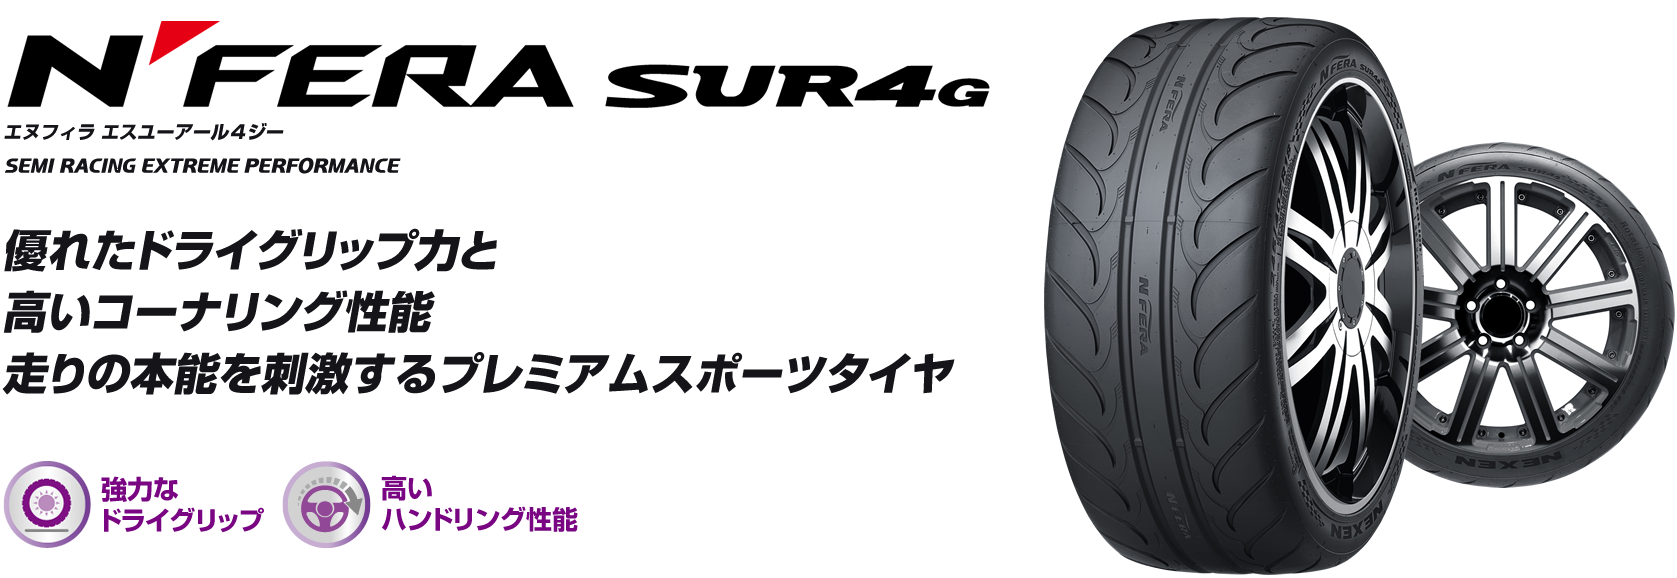 NFERA SUR4G | 株式会社ネクセンタイヤジャパン